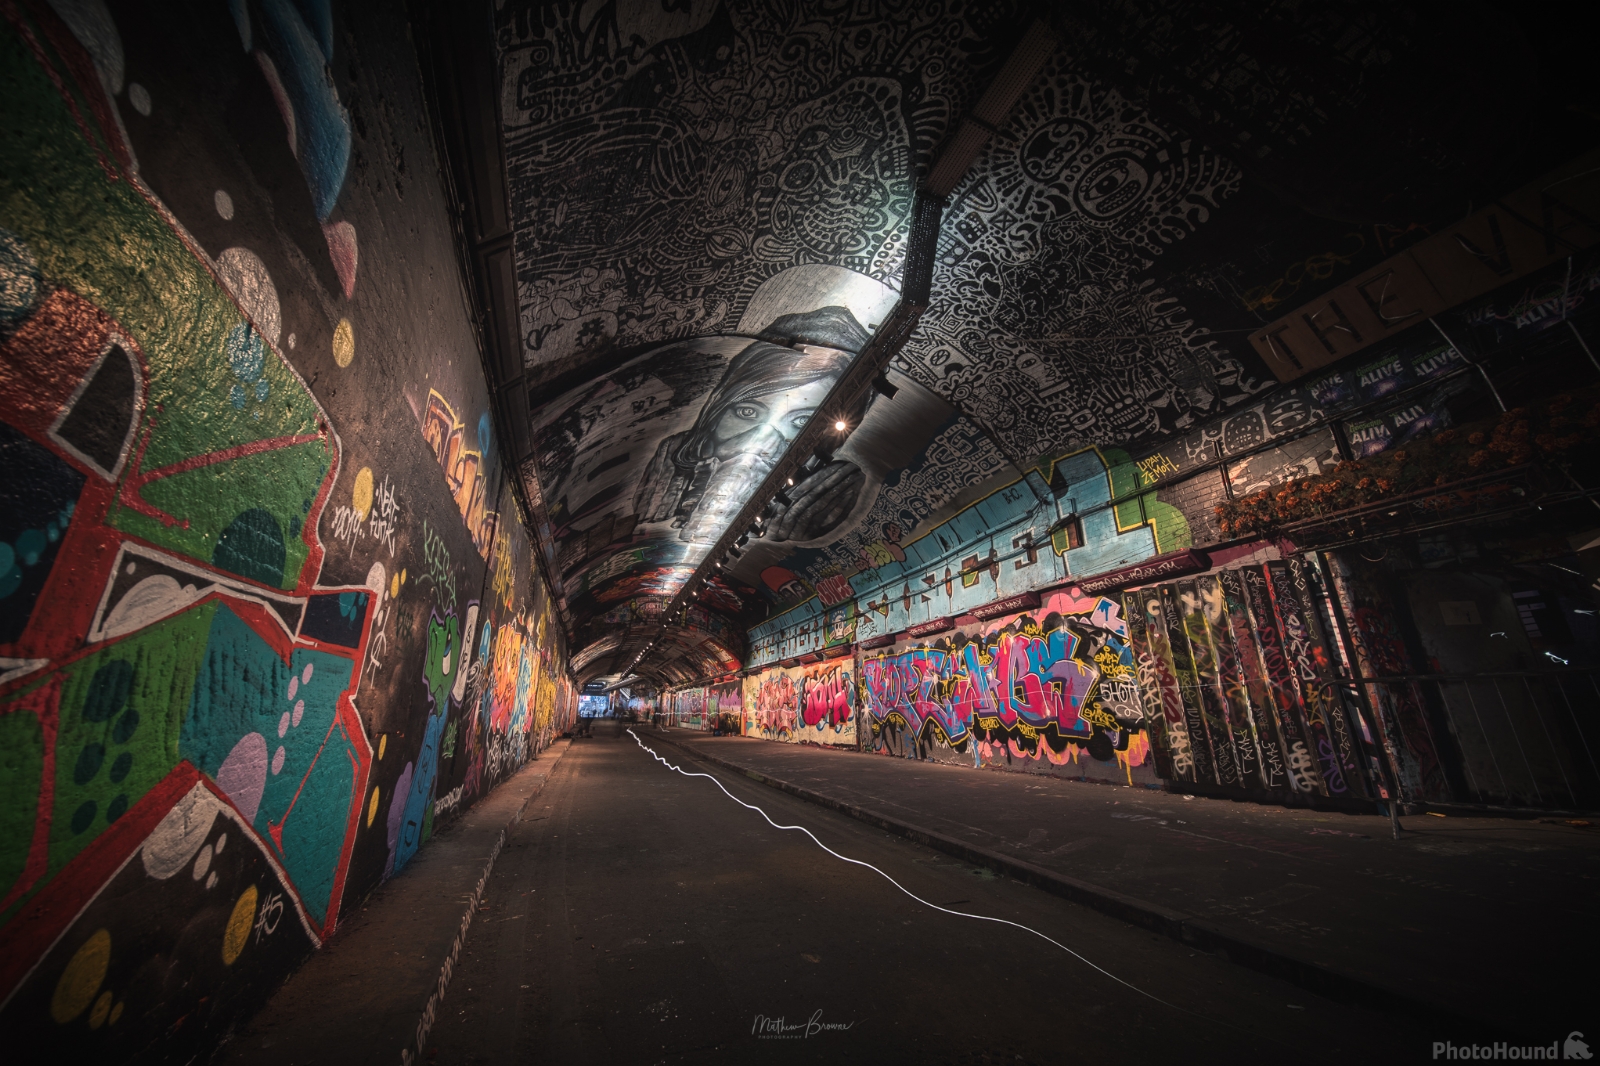 Image of Leake Street Graffiti Tunnel by Mathew Browne